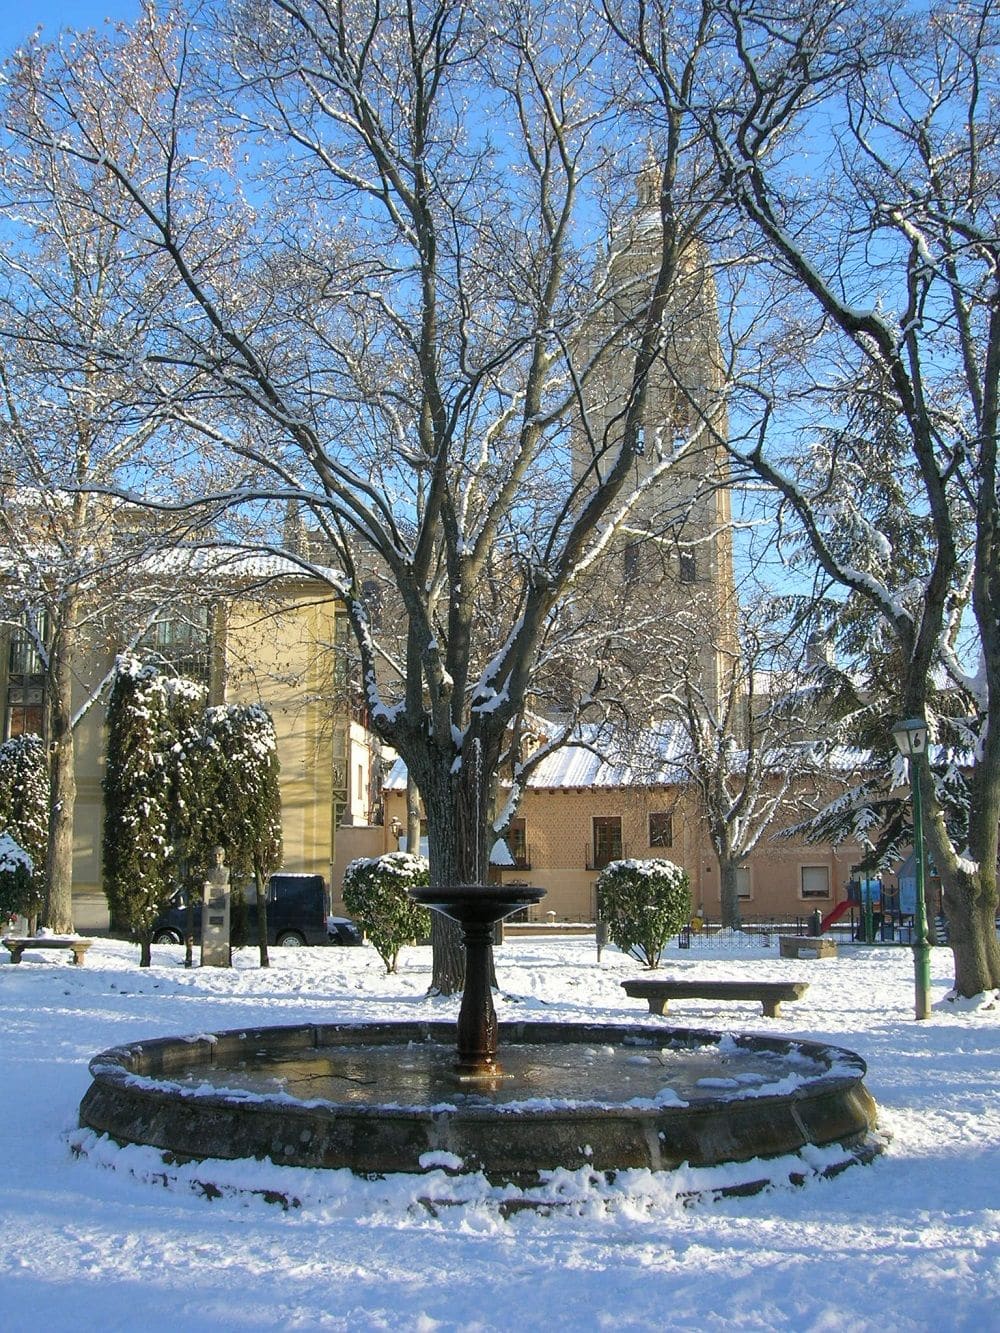 Segovia winter scene